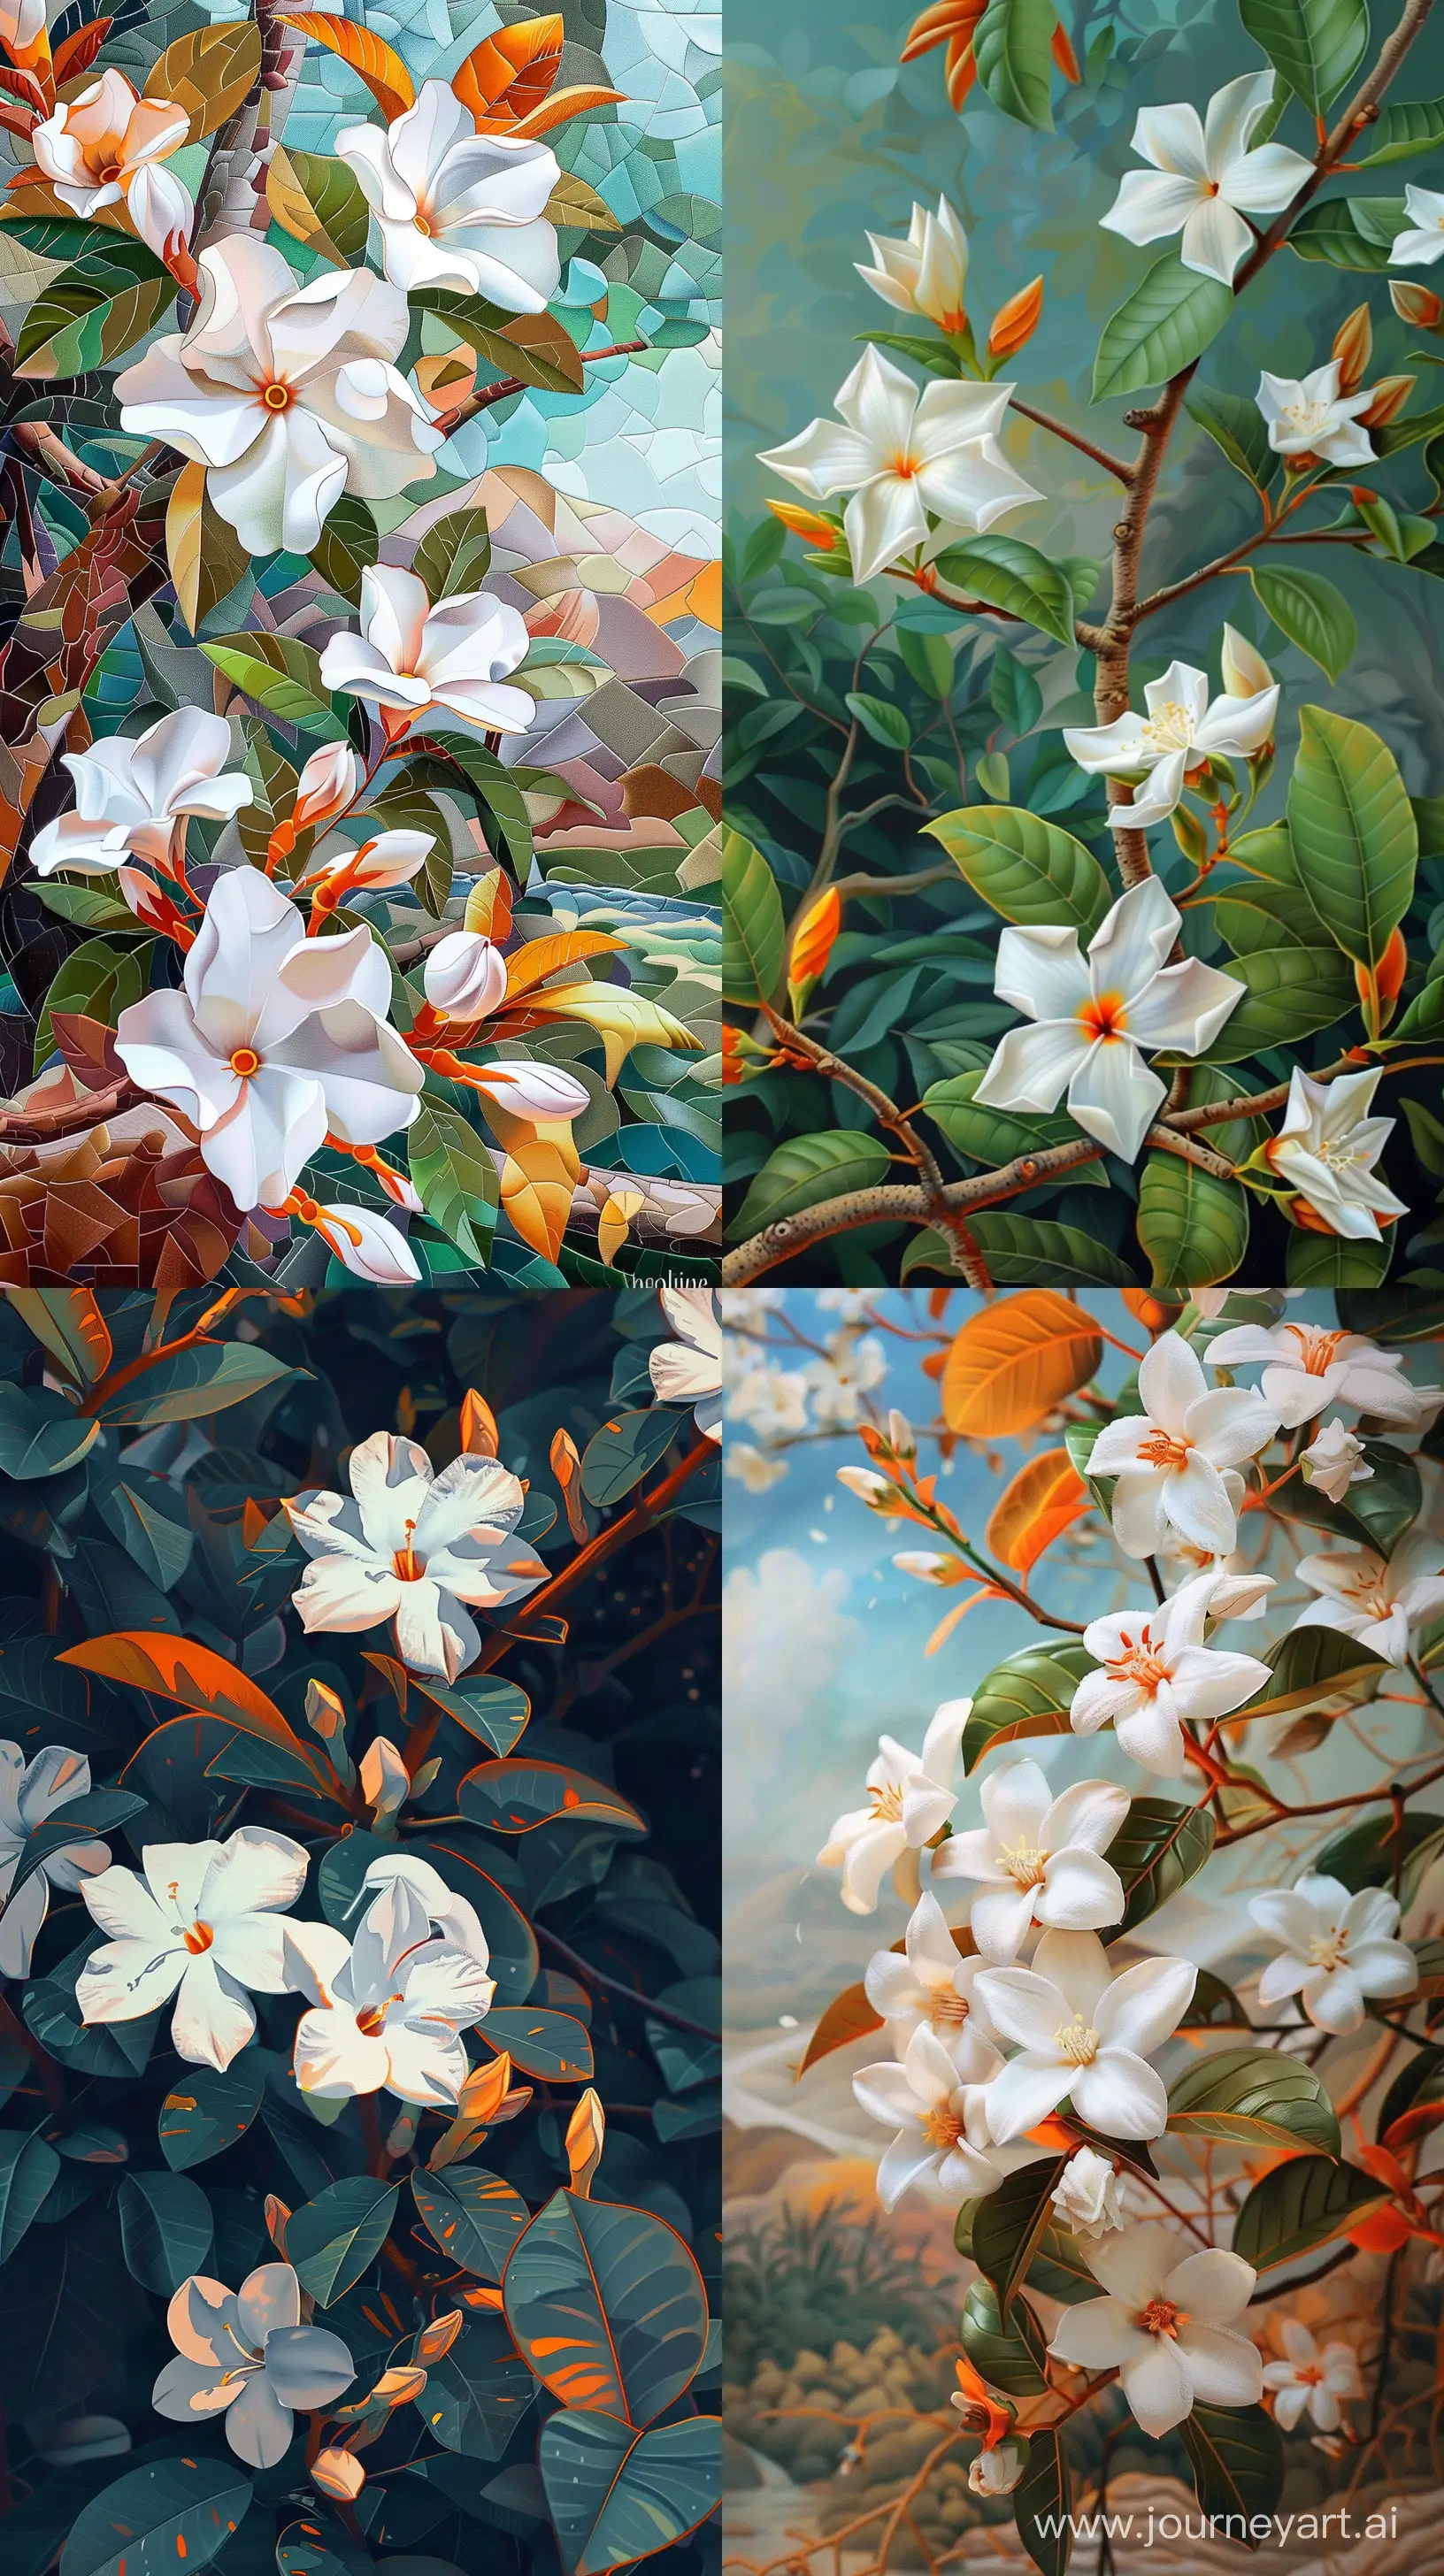 Vibrant-Jasmine-Flowers-in-Serene-Scenery